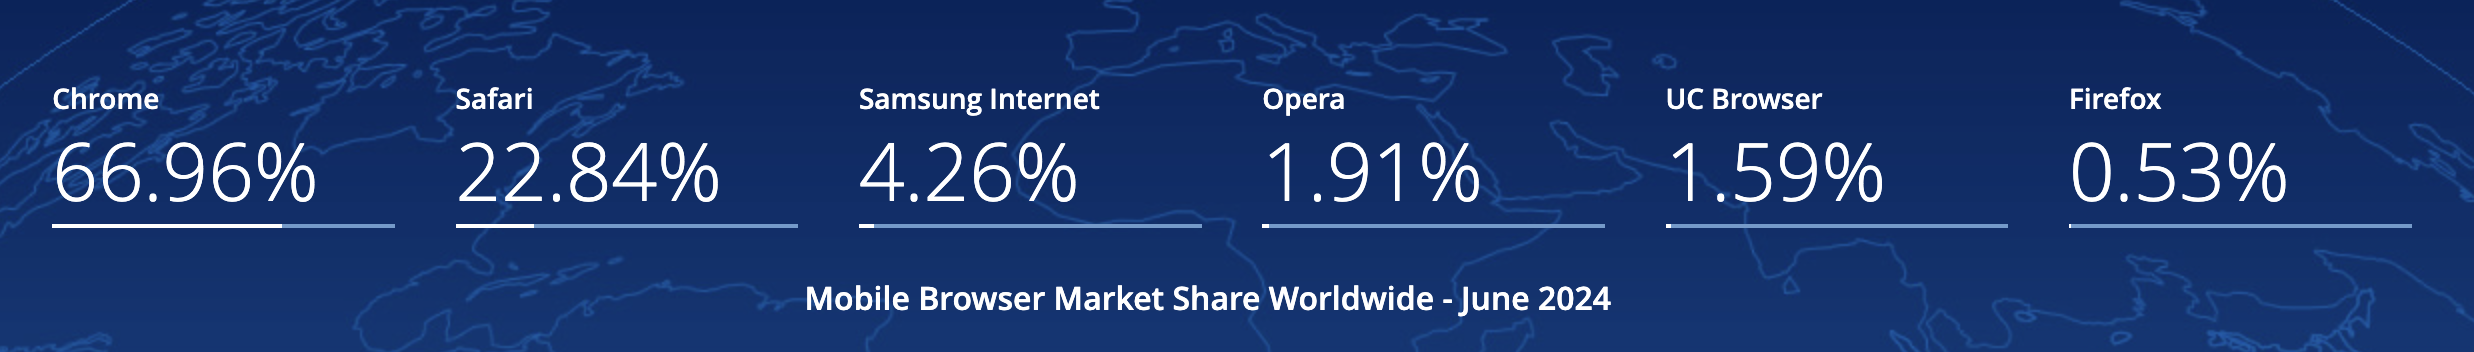 Mobile Browser Market Share in June 2024